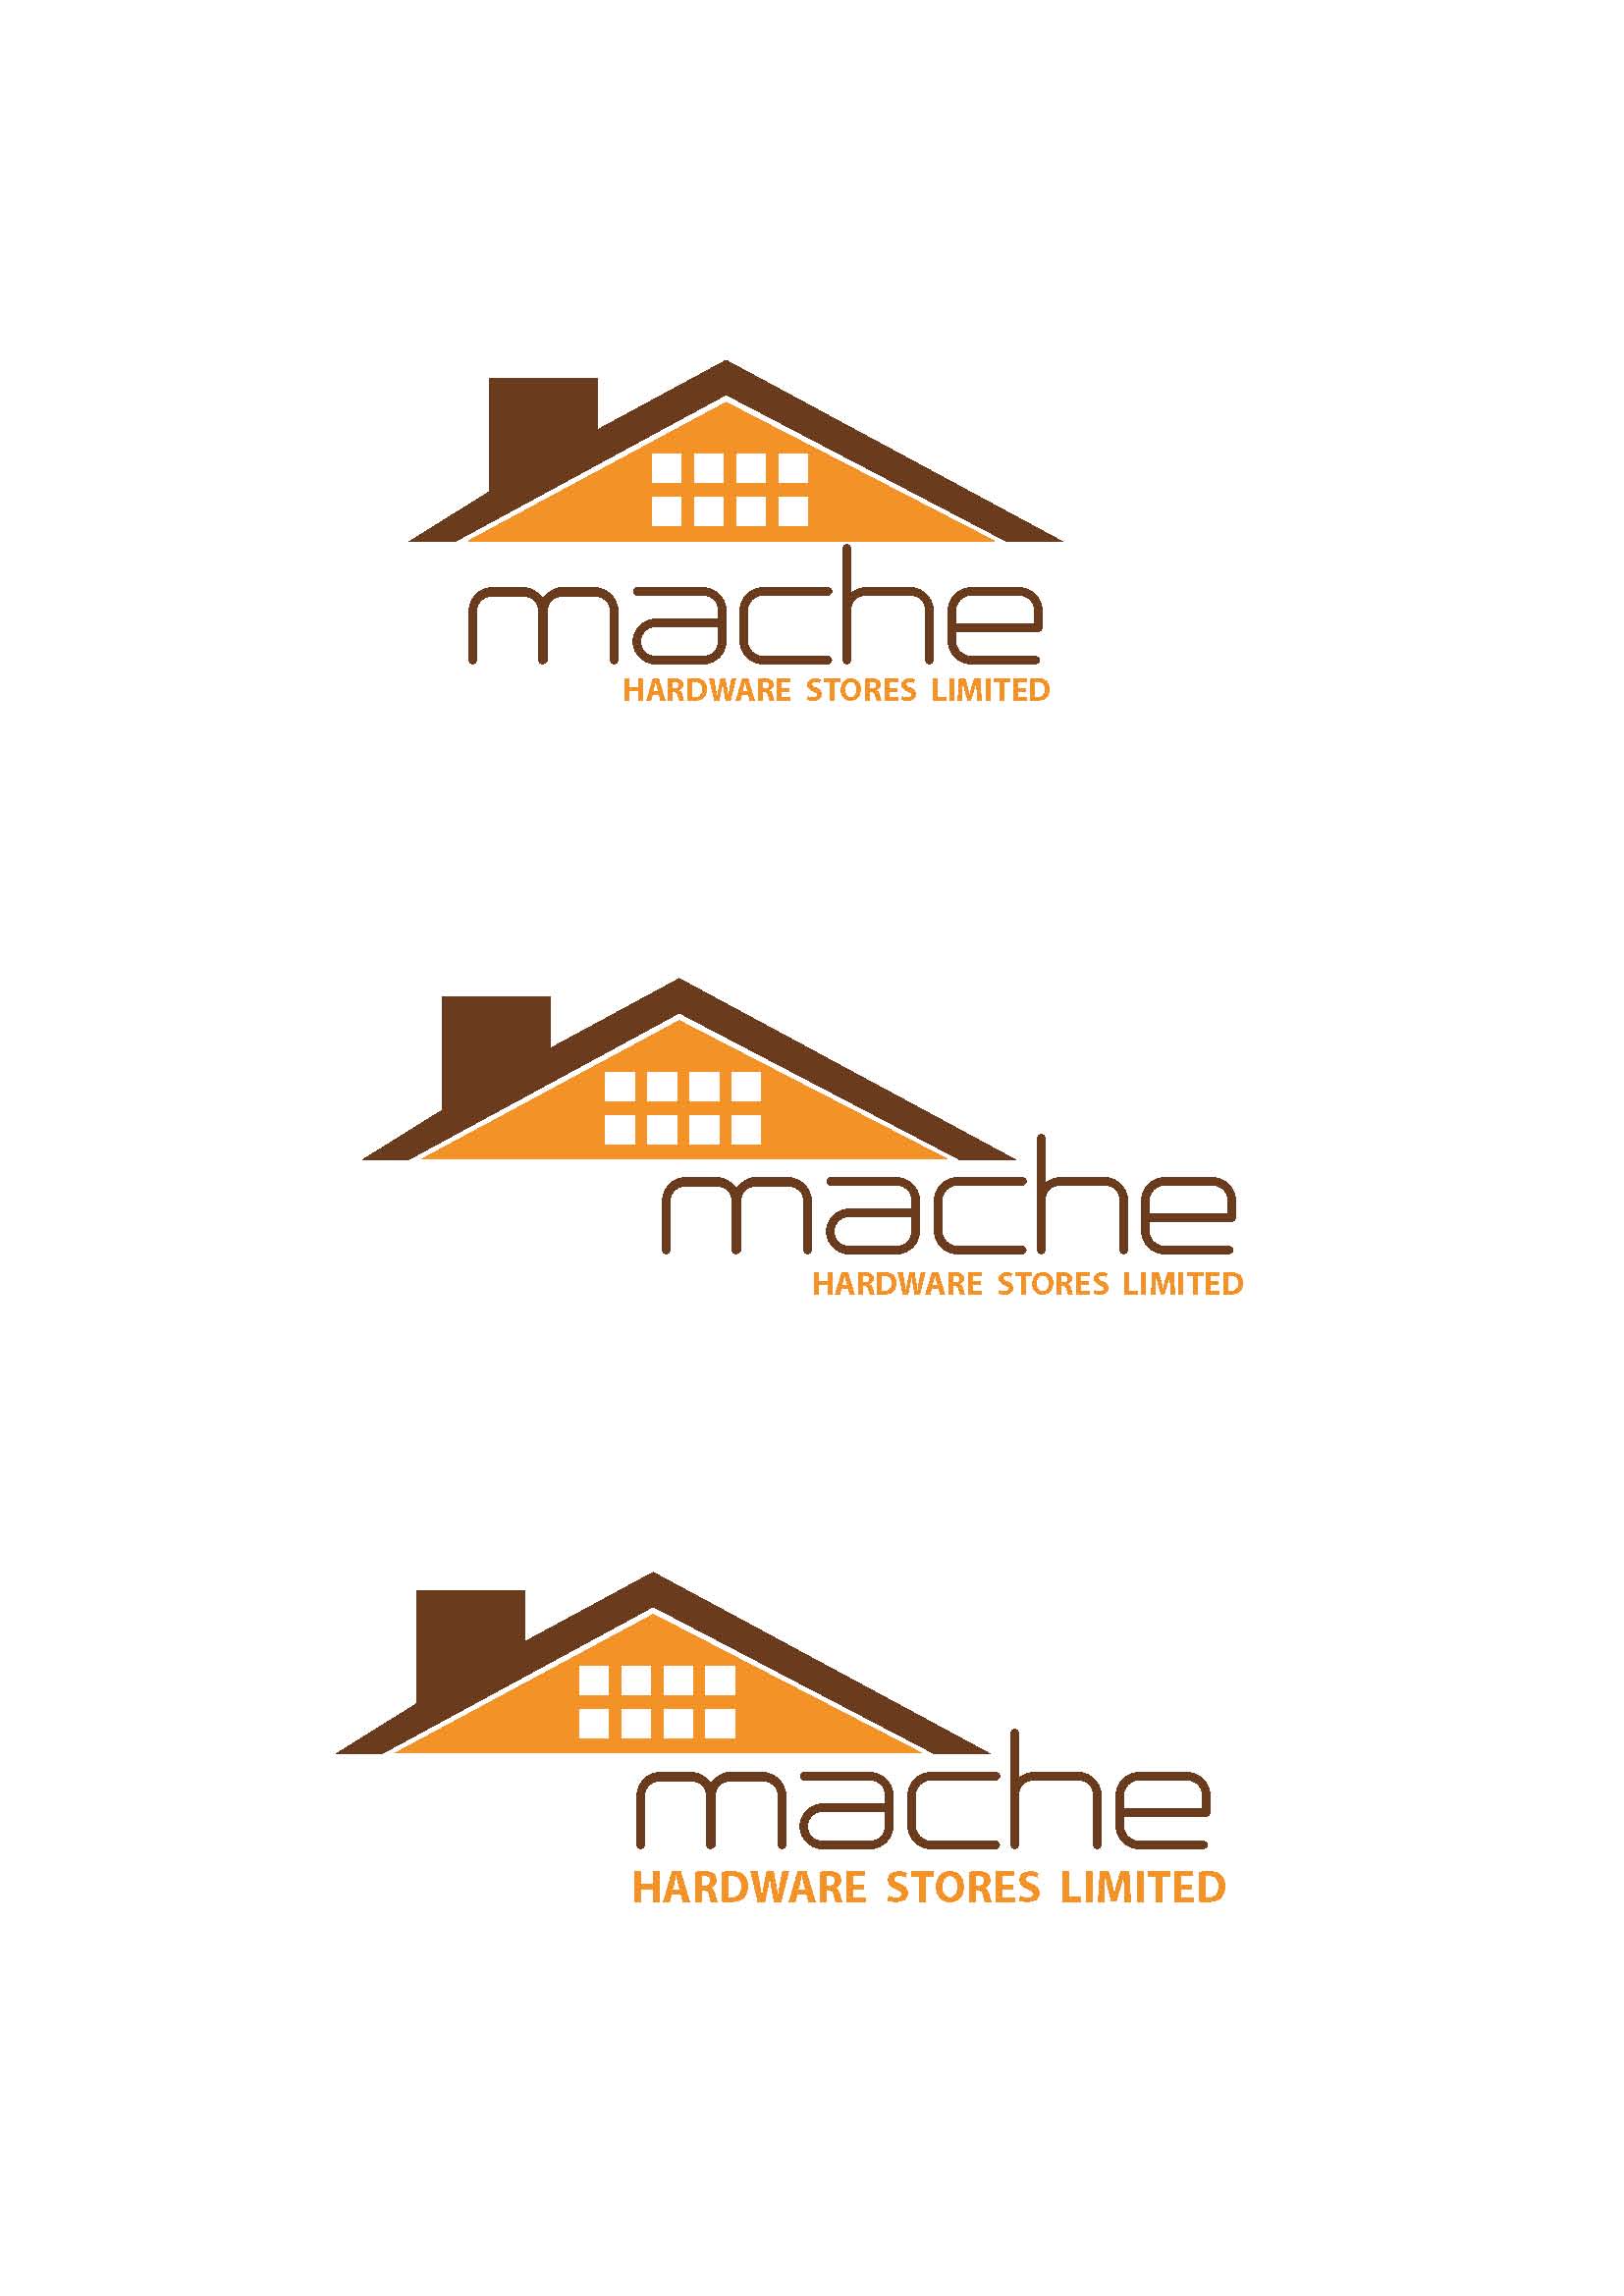 Hardware Logo - Mache Hardware Logo Samples